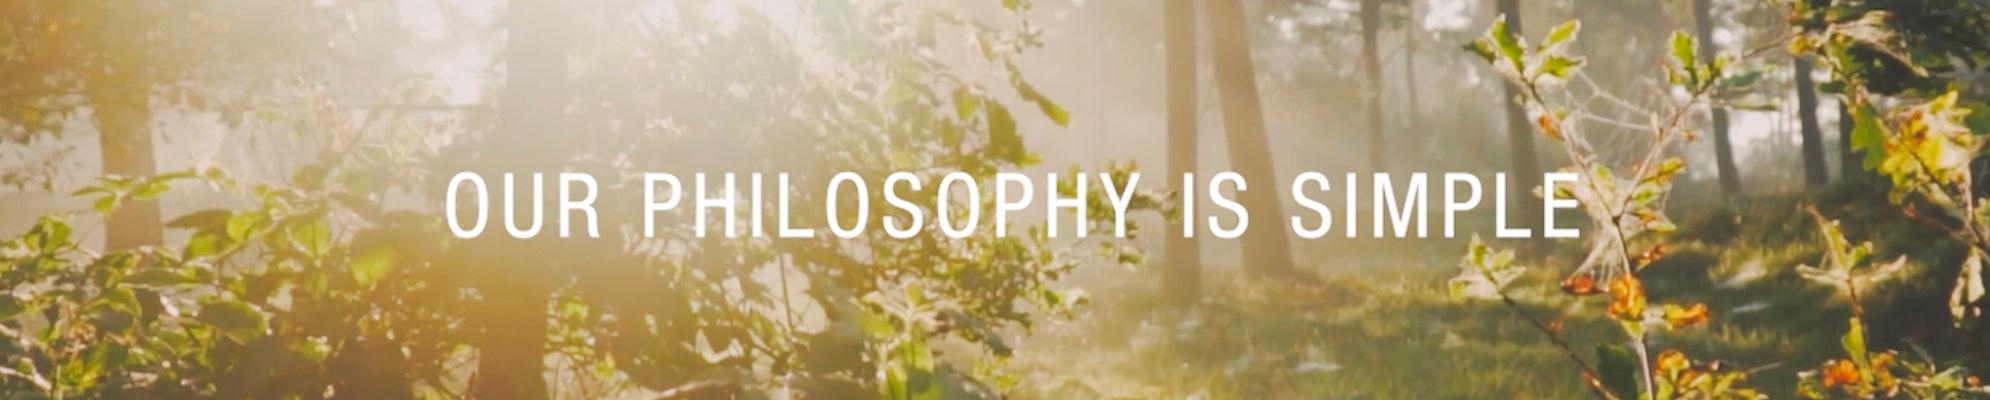 Philosophy-Video-Cover-Photo.jpg